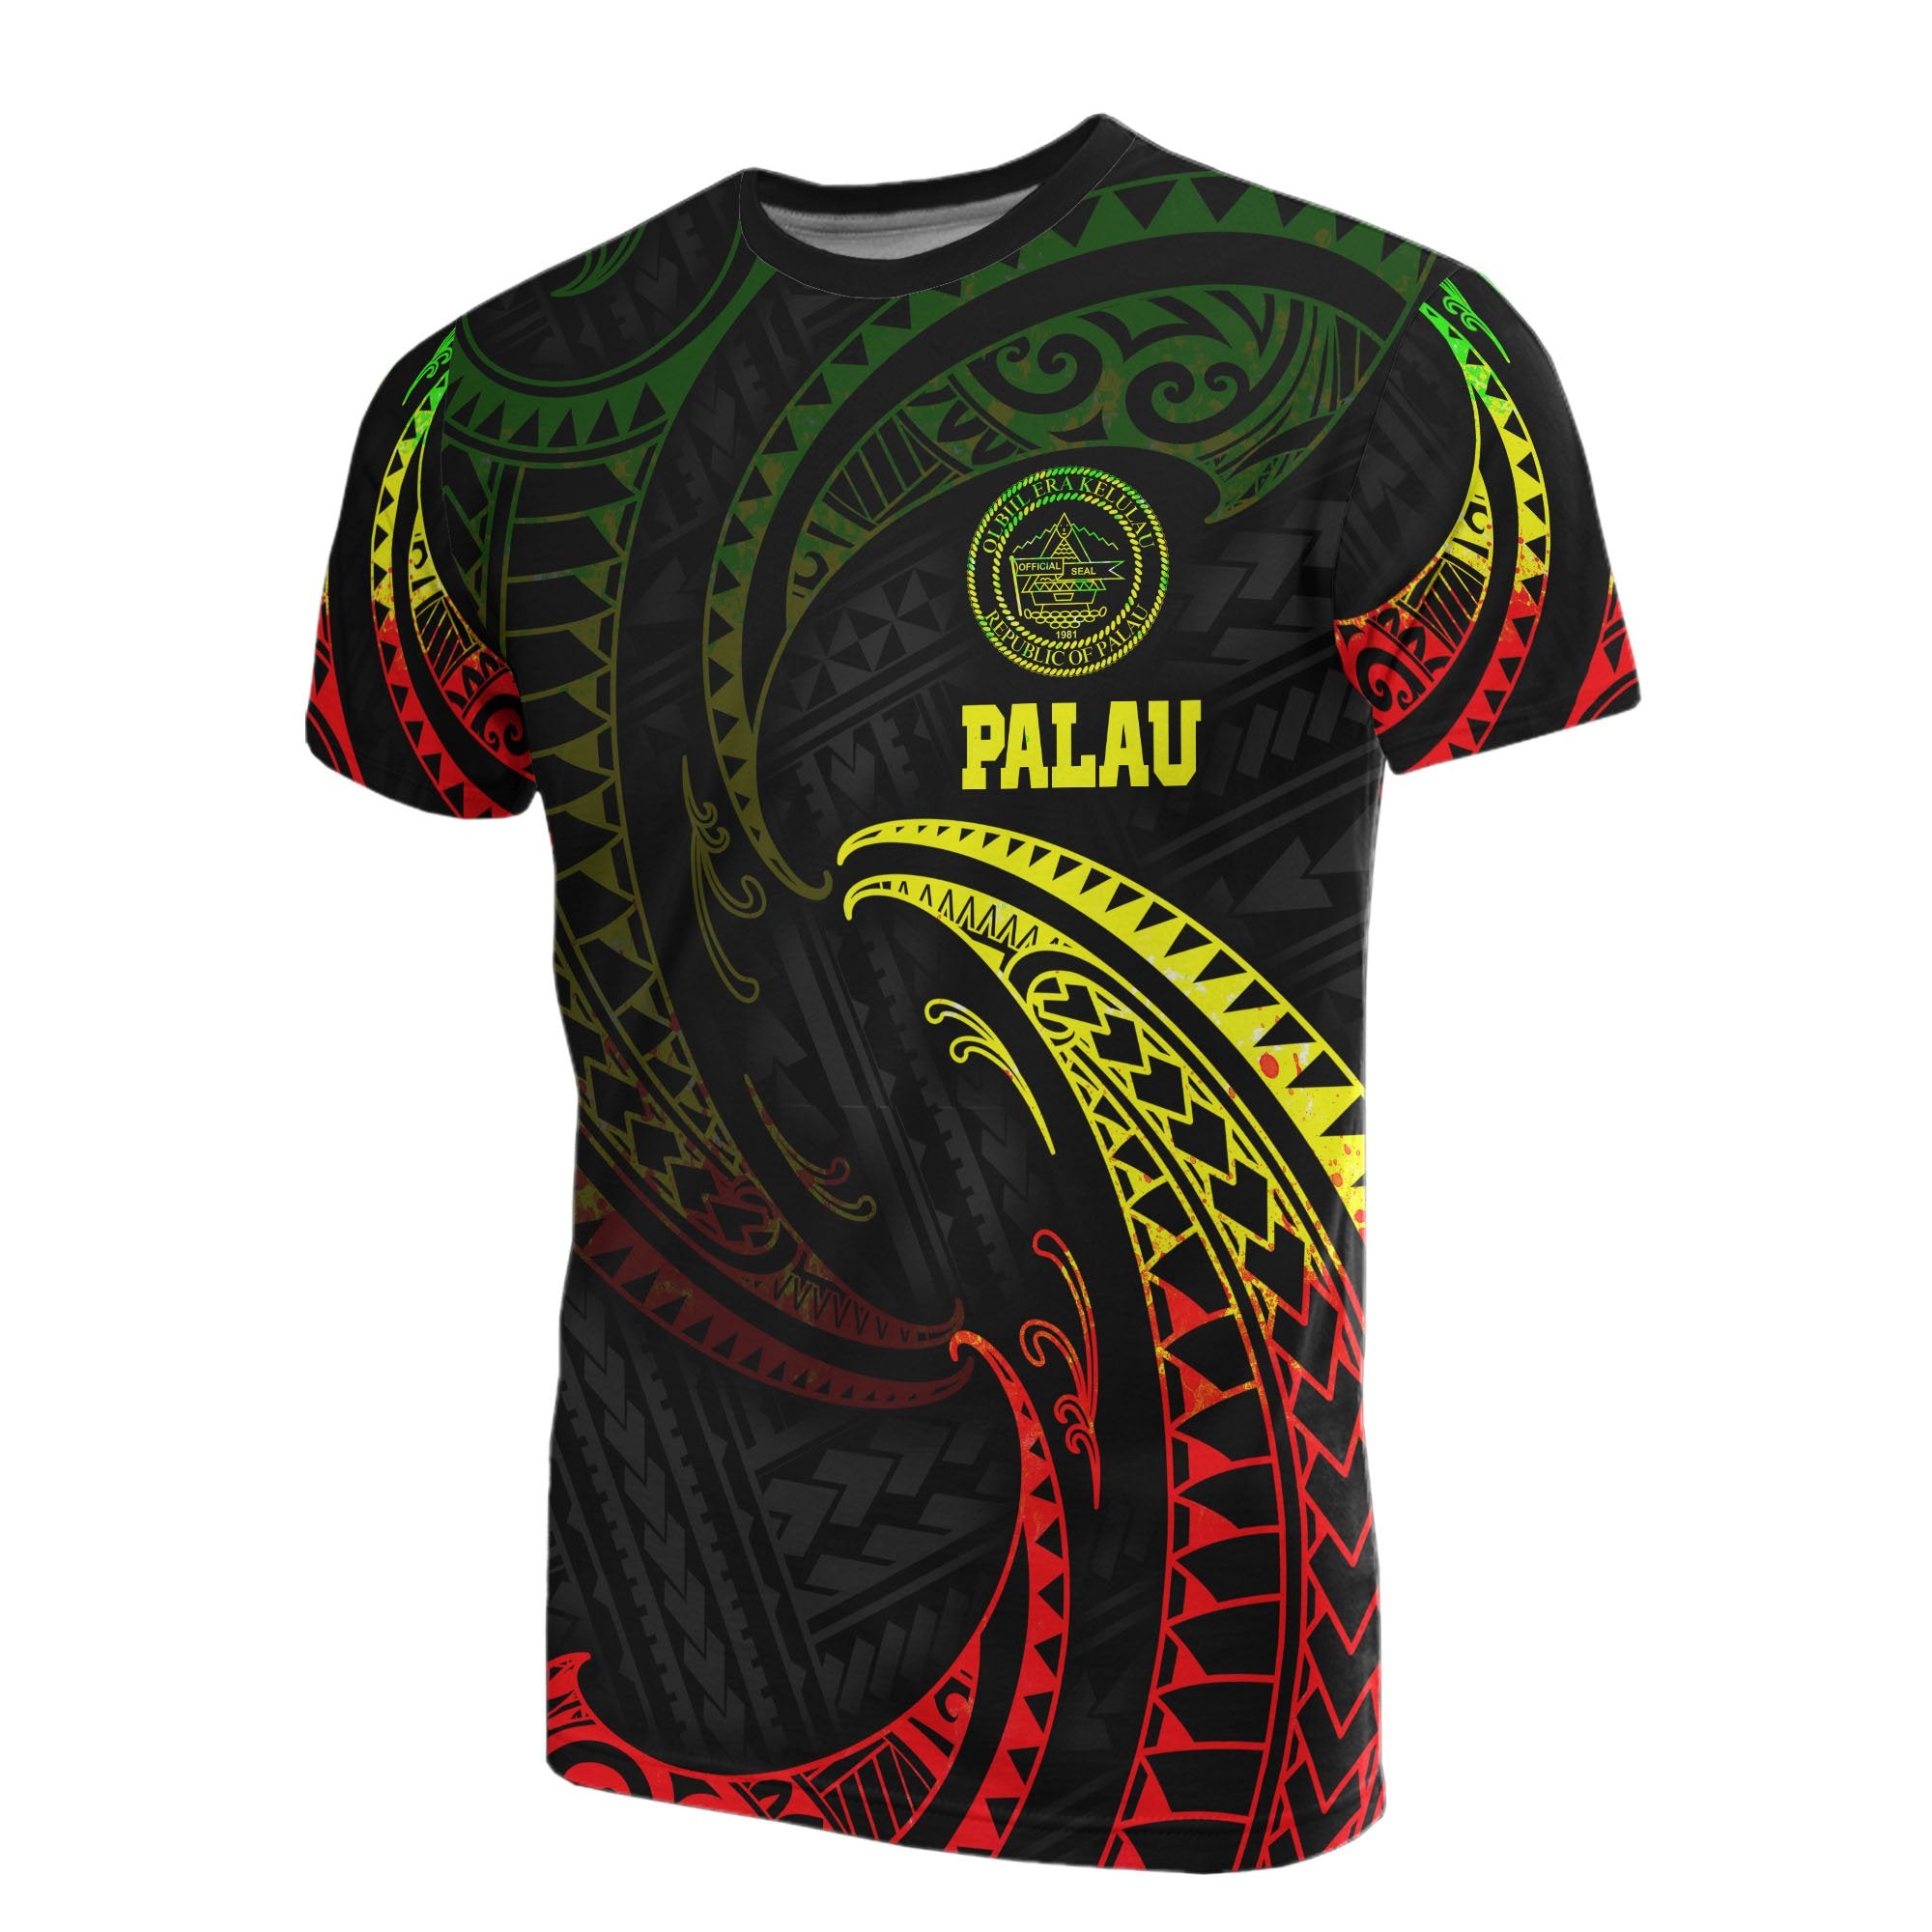 Palau Polynesian T-Shirt - Reggae Tribal Wave